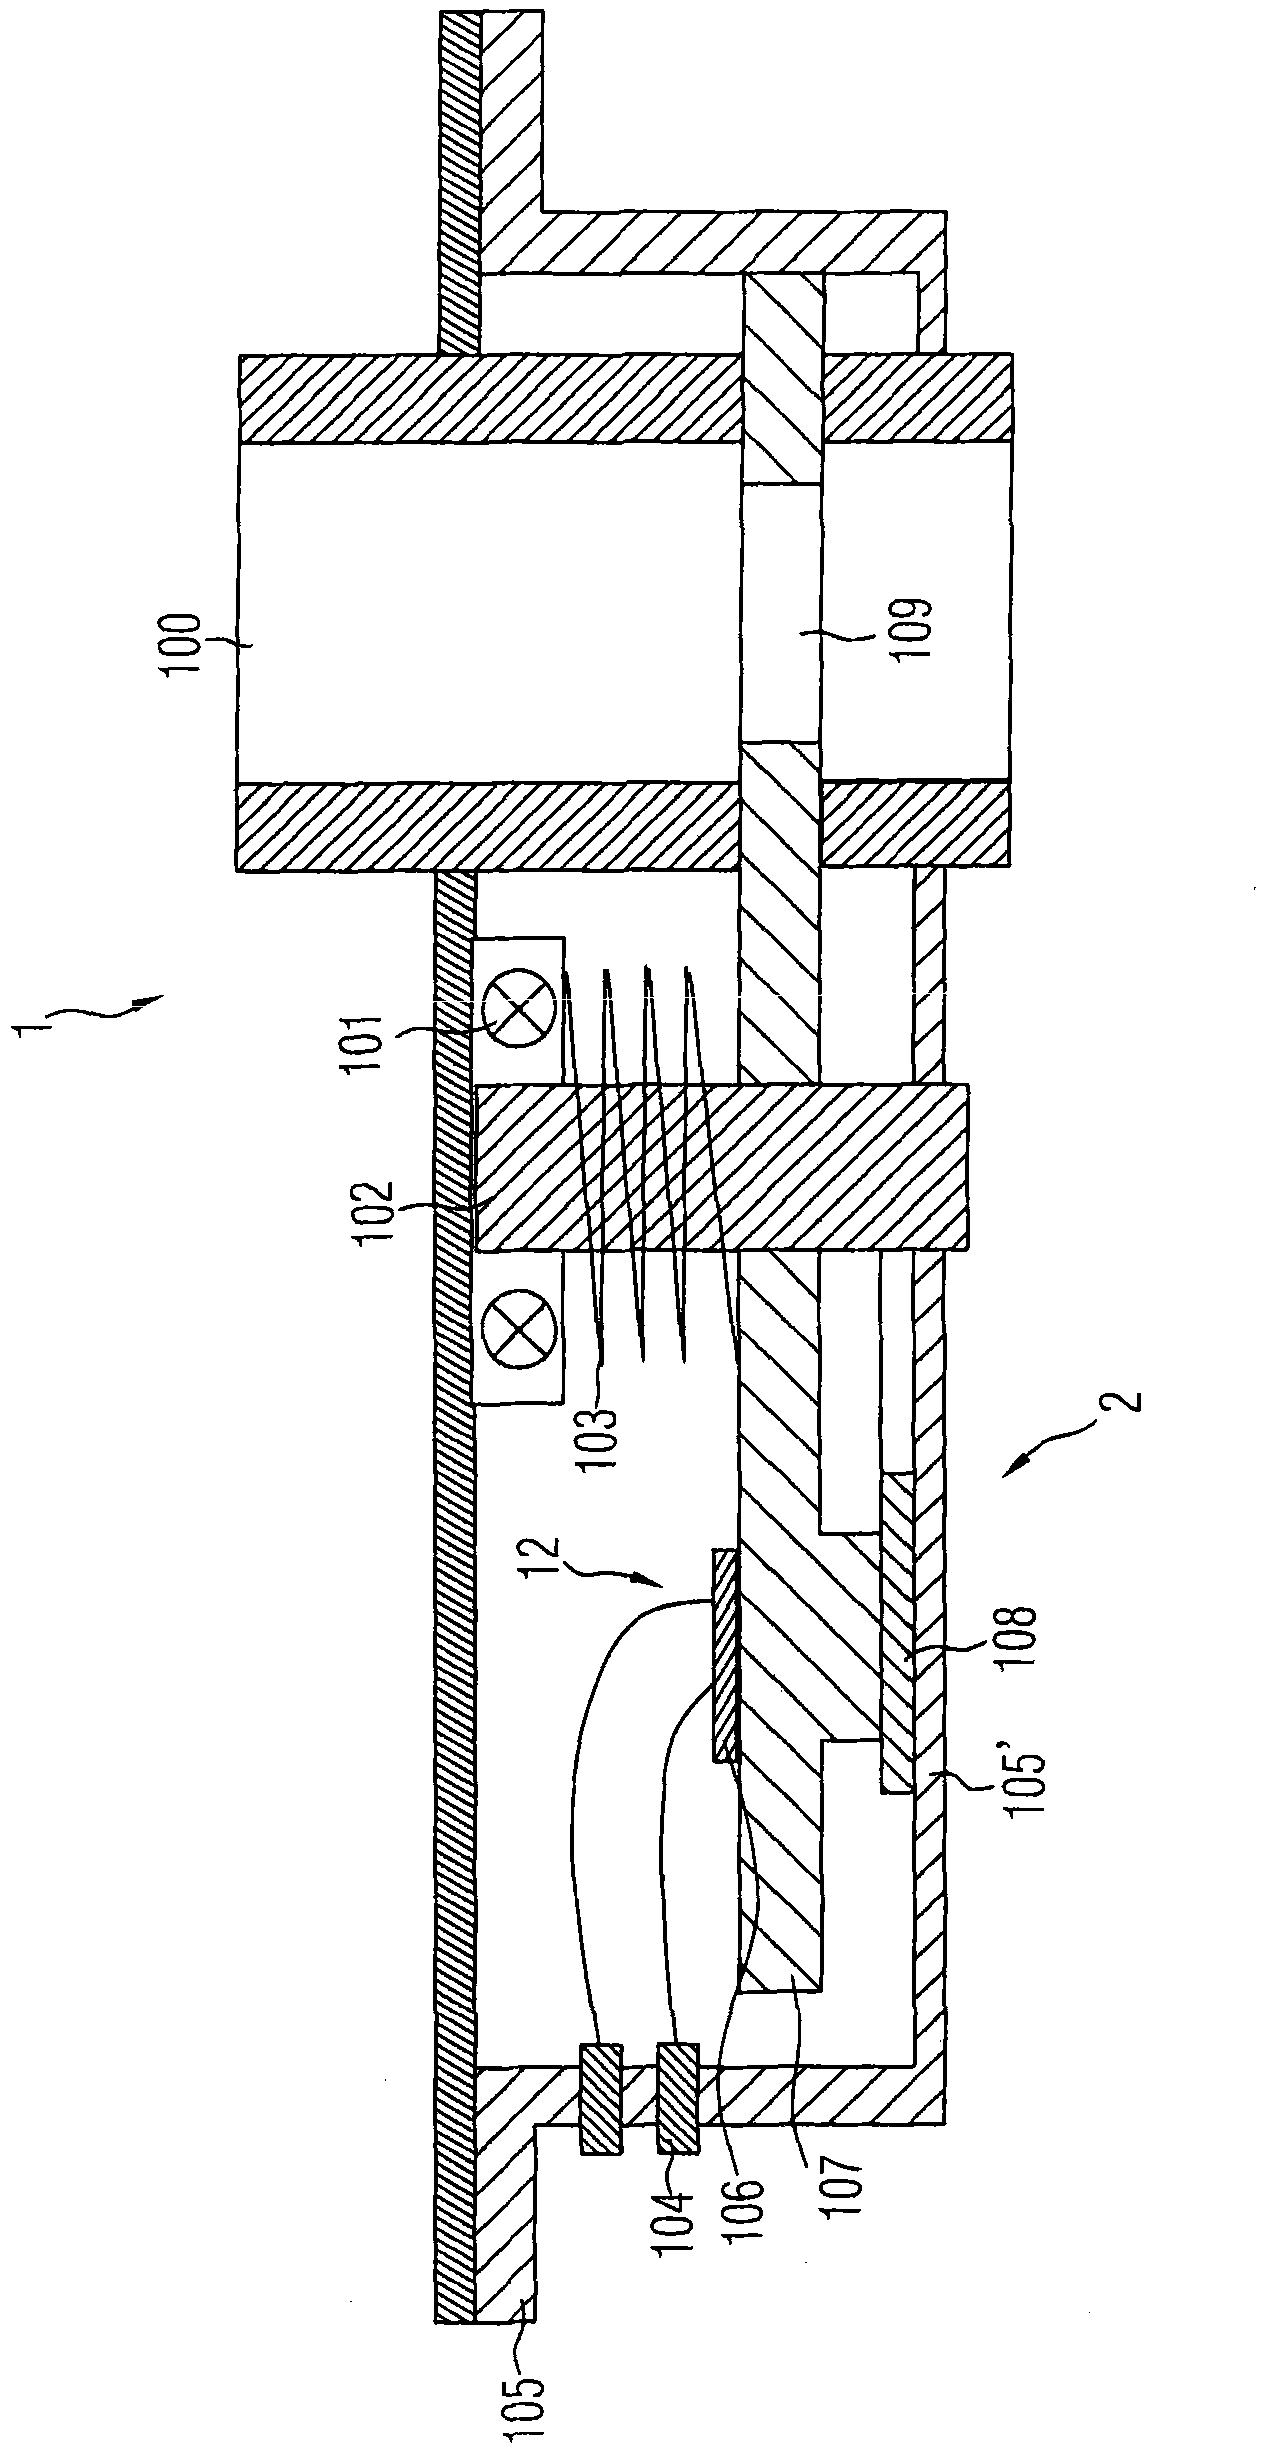 Flow control valve